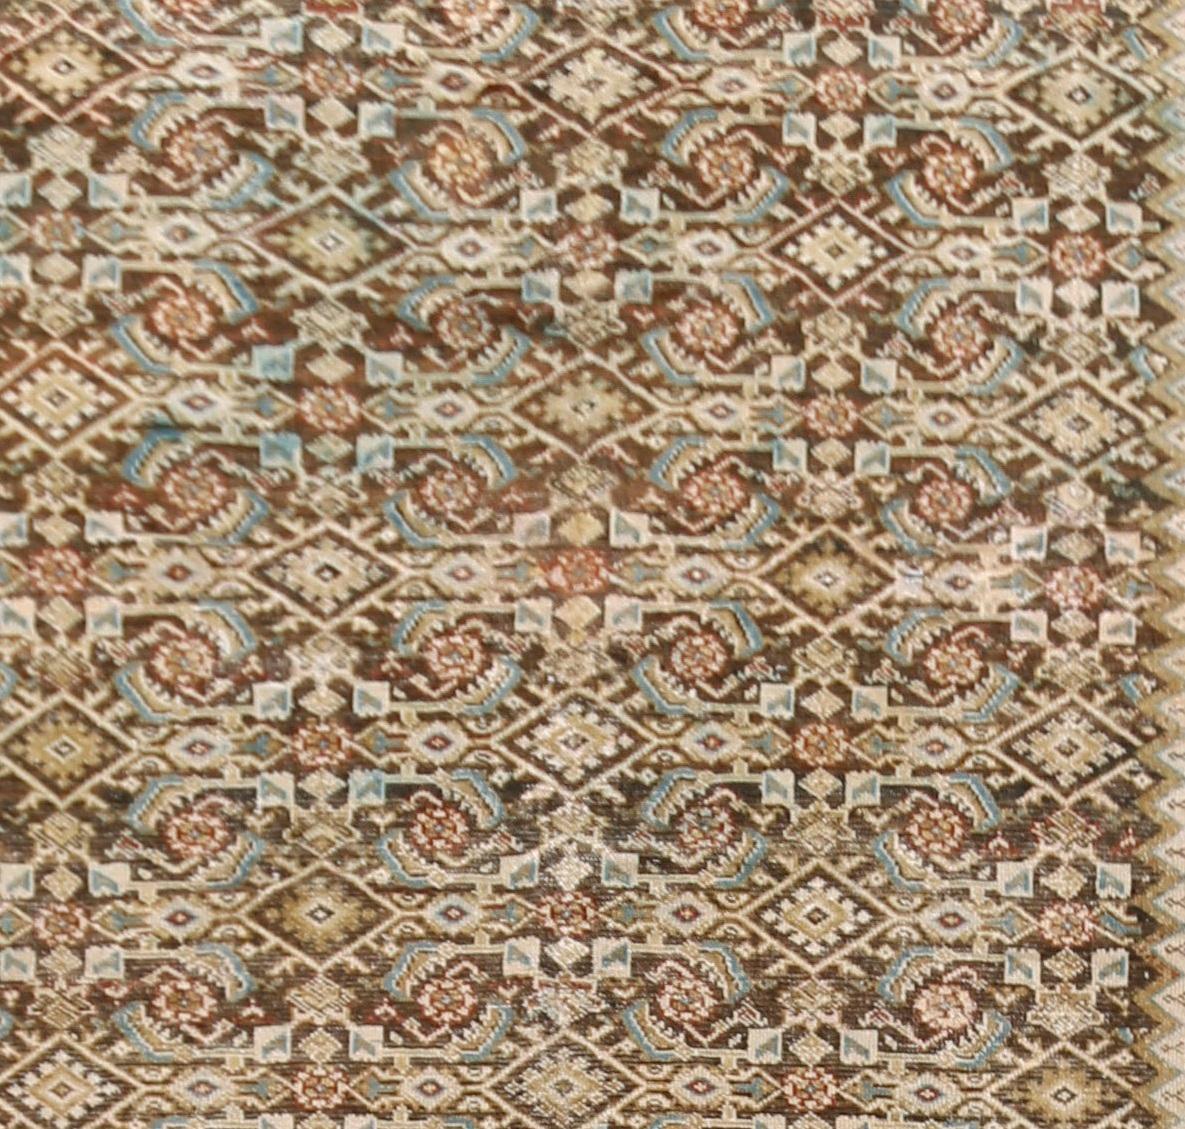 Antique Persian Malayer Corridor Carpet Rug, 7'1 x 17'11 For Sale 1